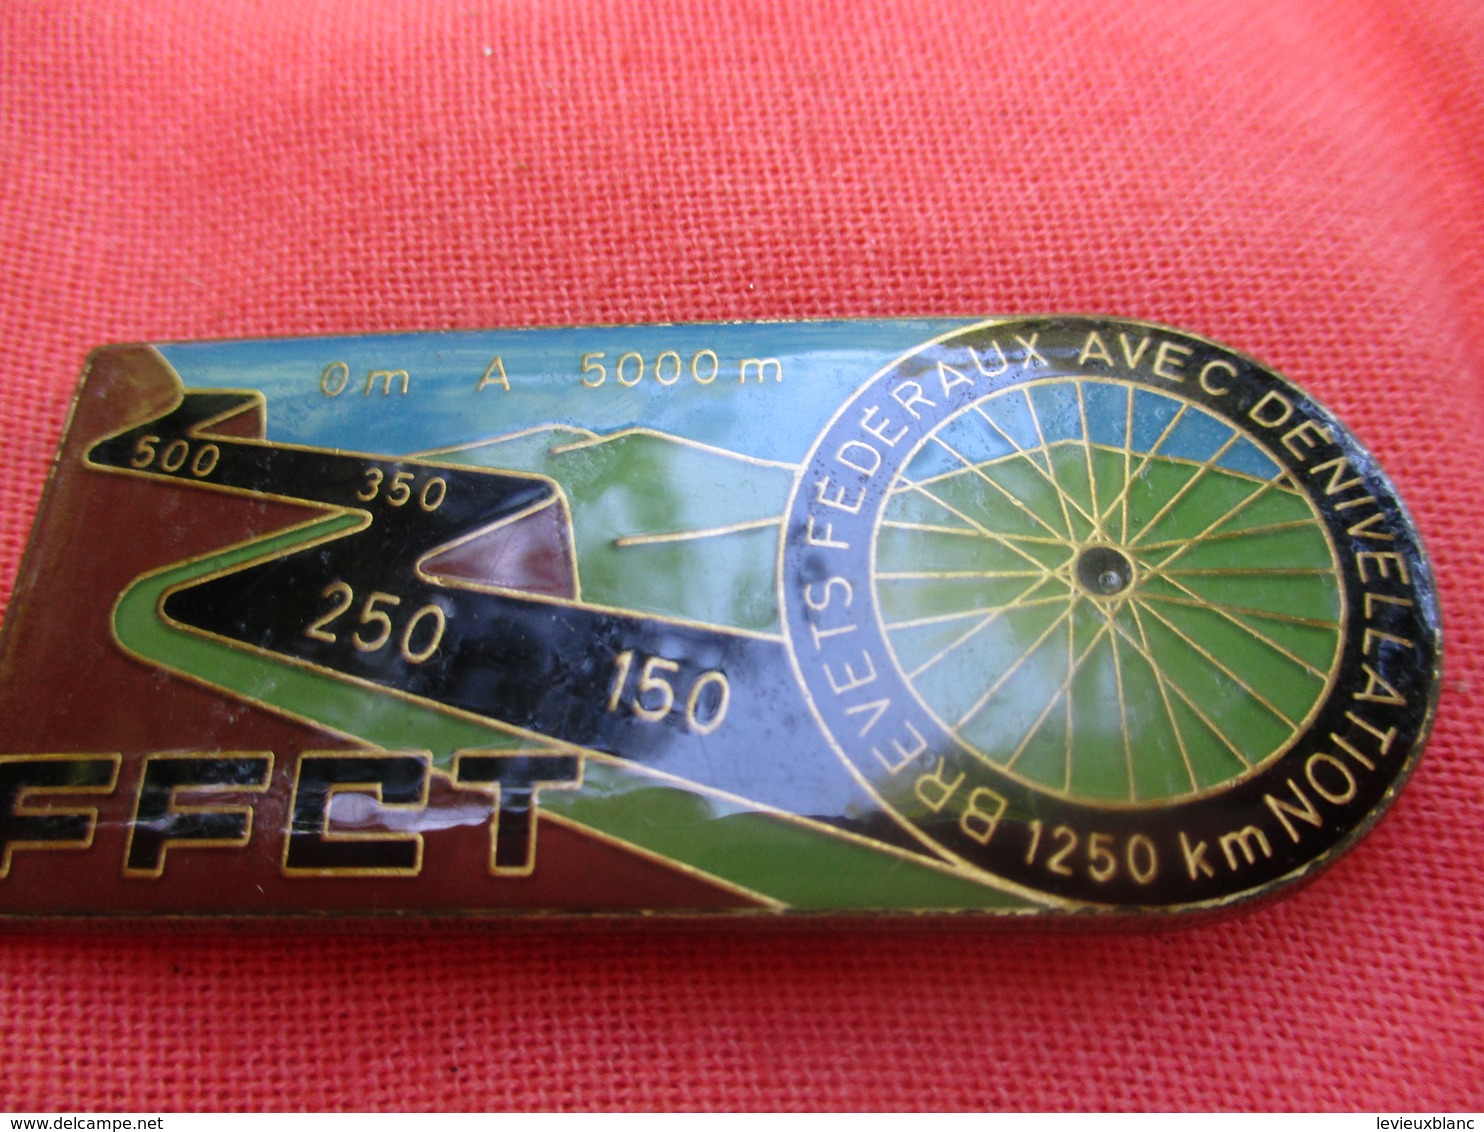 Médaille De Sport/Cyclisme/Brevets Federaux Avec Dénivellation/1250 Km /Beraudy 63 AMBERT/vers 1980-90      SPO298 - Cycling